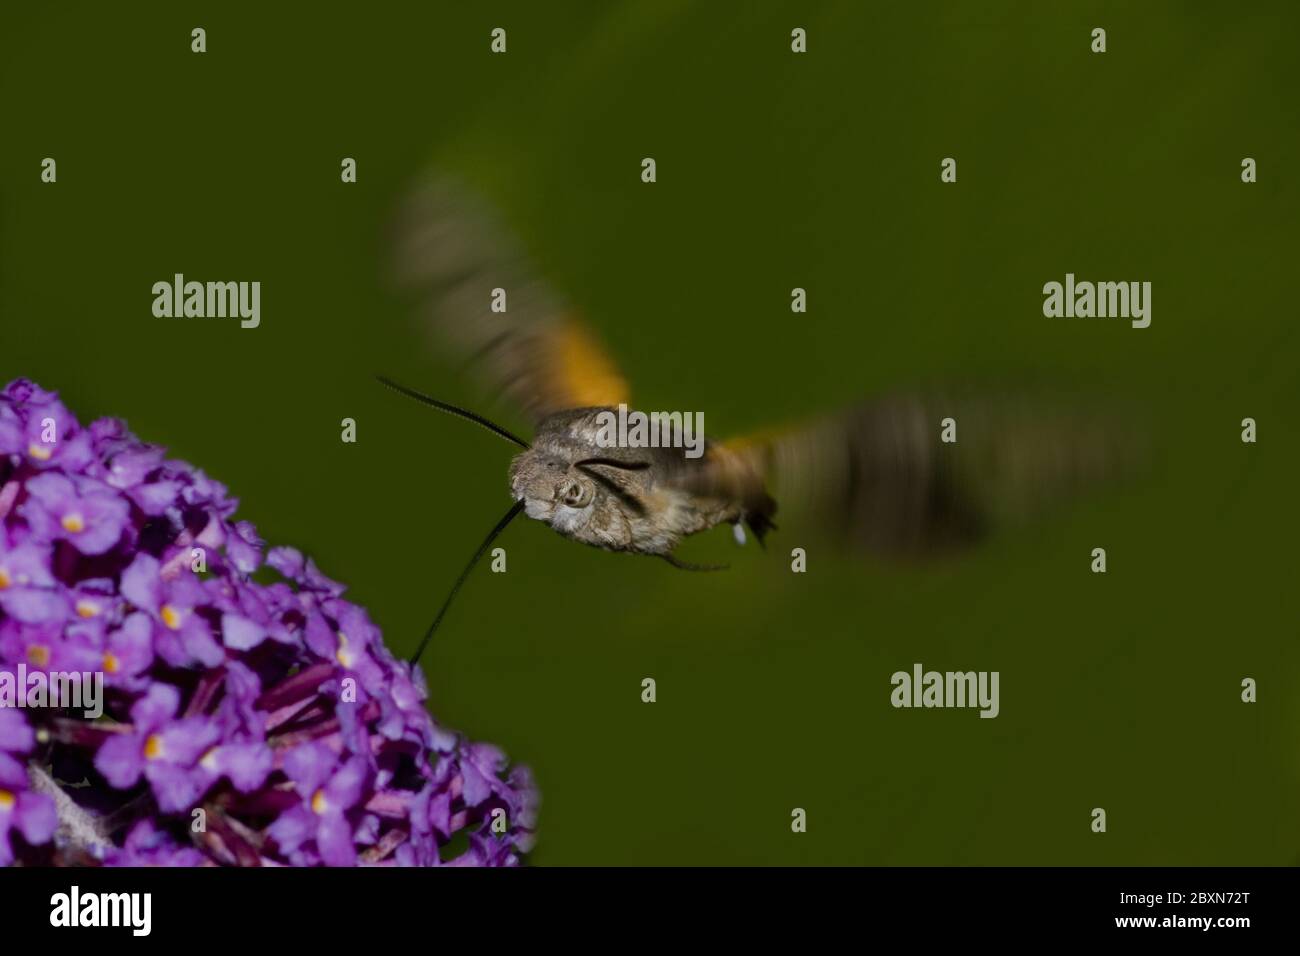 Kolibri-Falkenmotte Macroglossum stellatarum, Stockfoto